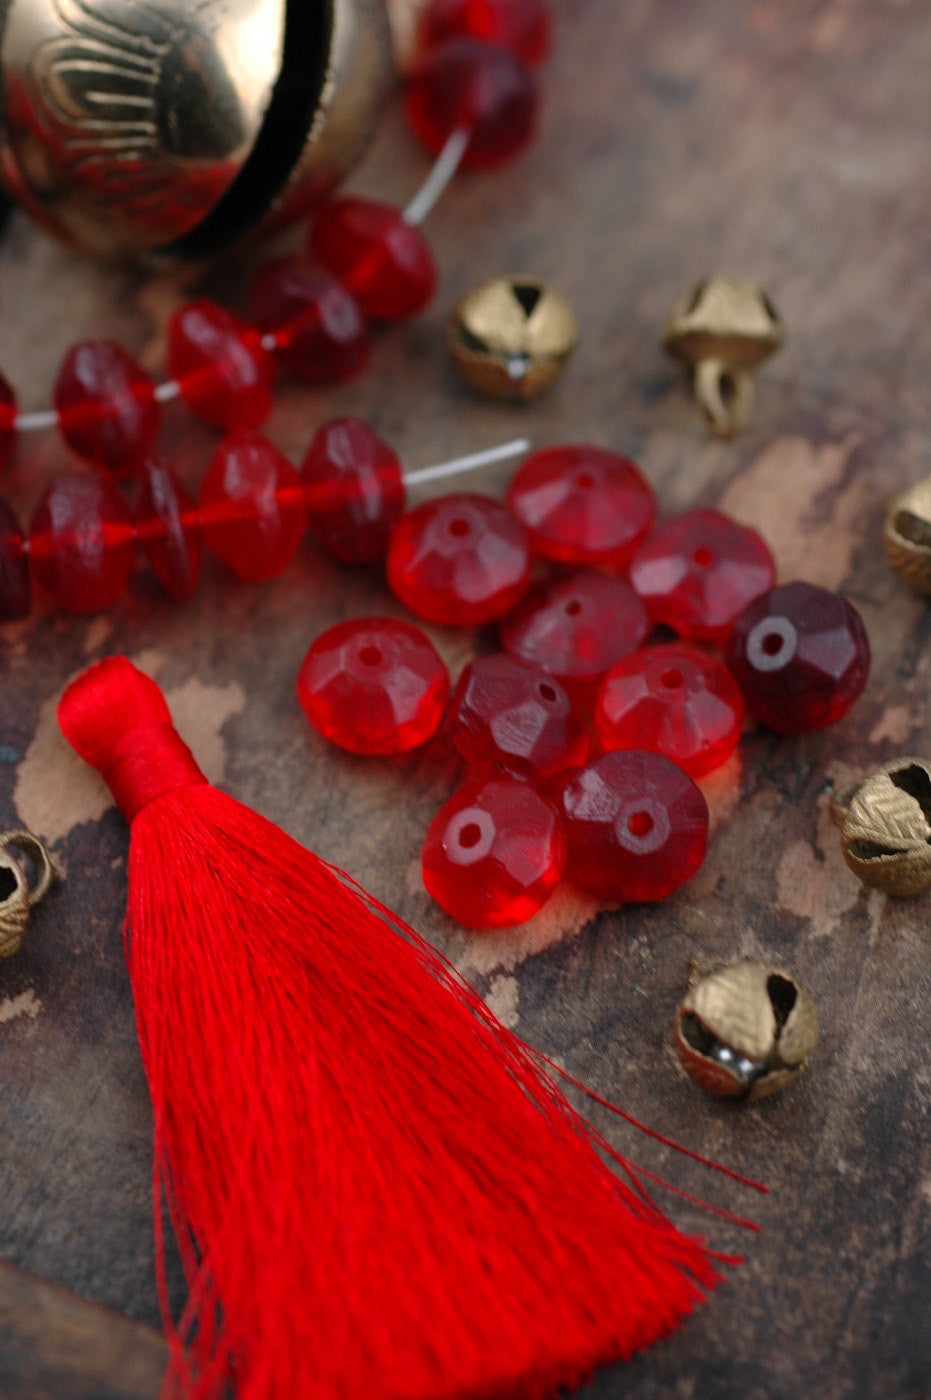 Antique Red Vaseline Glass African Trade Beads, 16x11mm, 10 loose beads - ShopWomanShopsWorld.com. Bone Beads, Tassels, Pom Poms, African Beads.